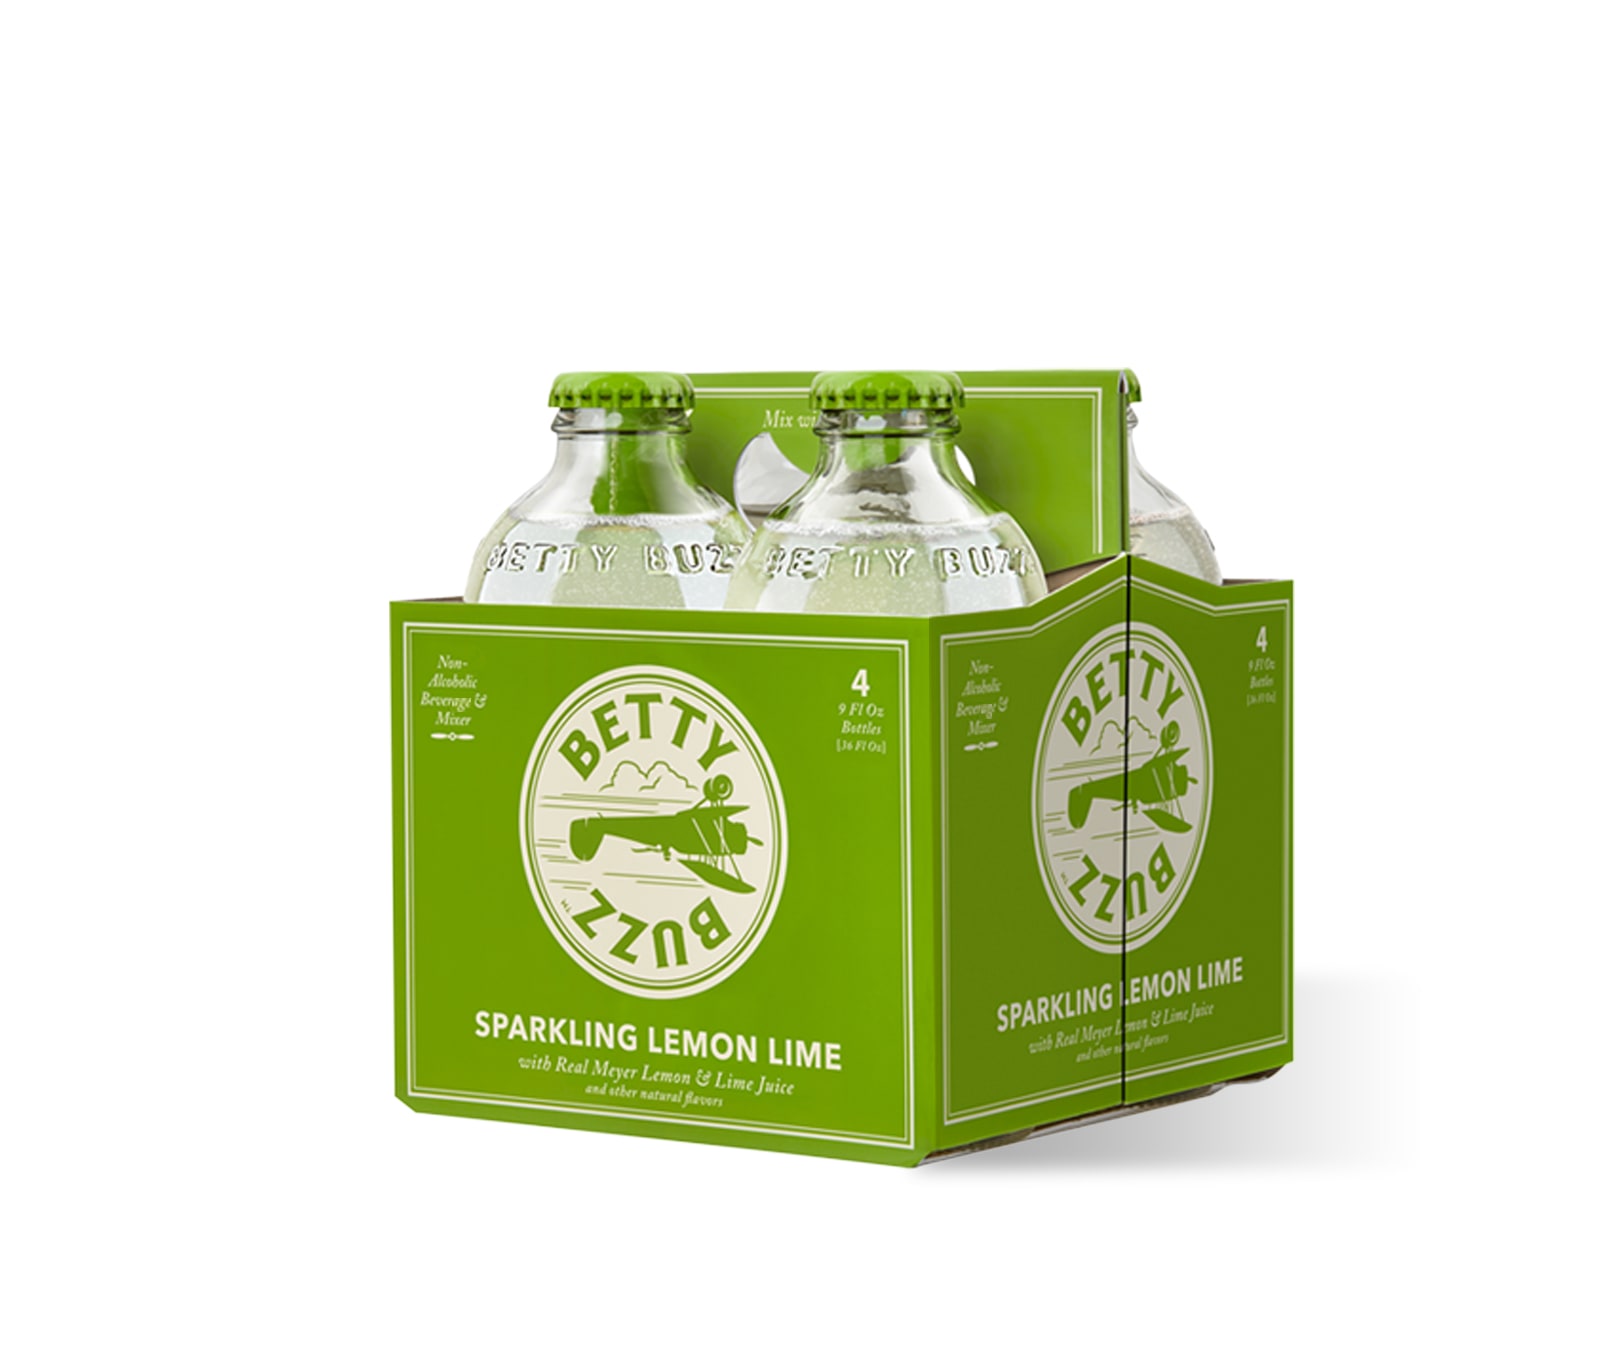 Betty Buzz Lemon lime 4-pack beverage packaging design